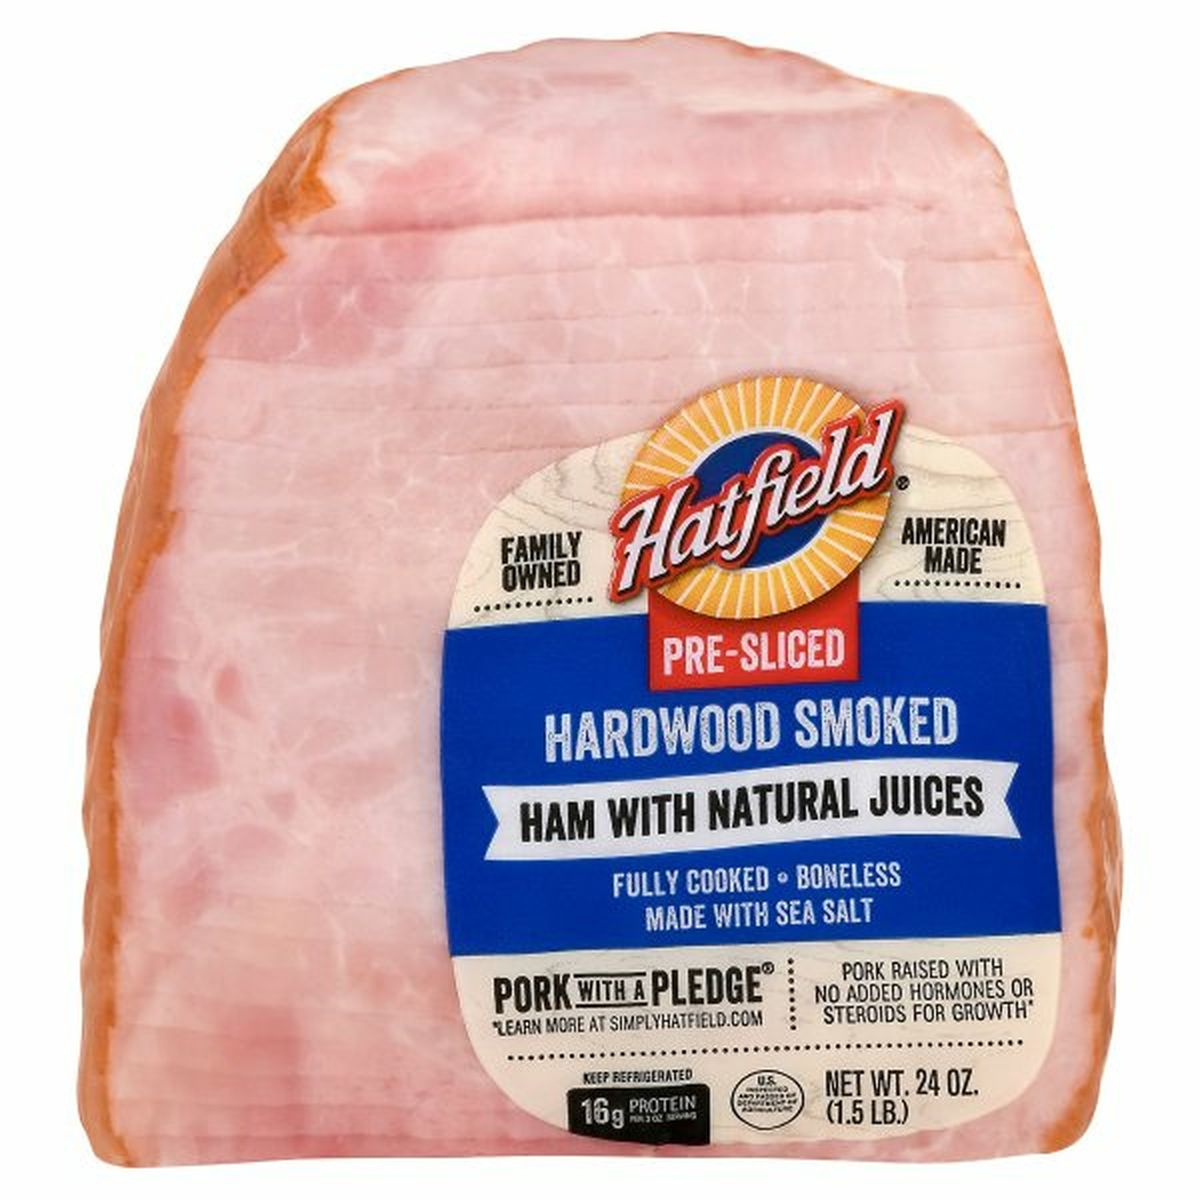 Calories in Hatfield Ham, Pre-Sliced, Hardwood Smoked